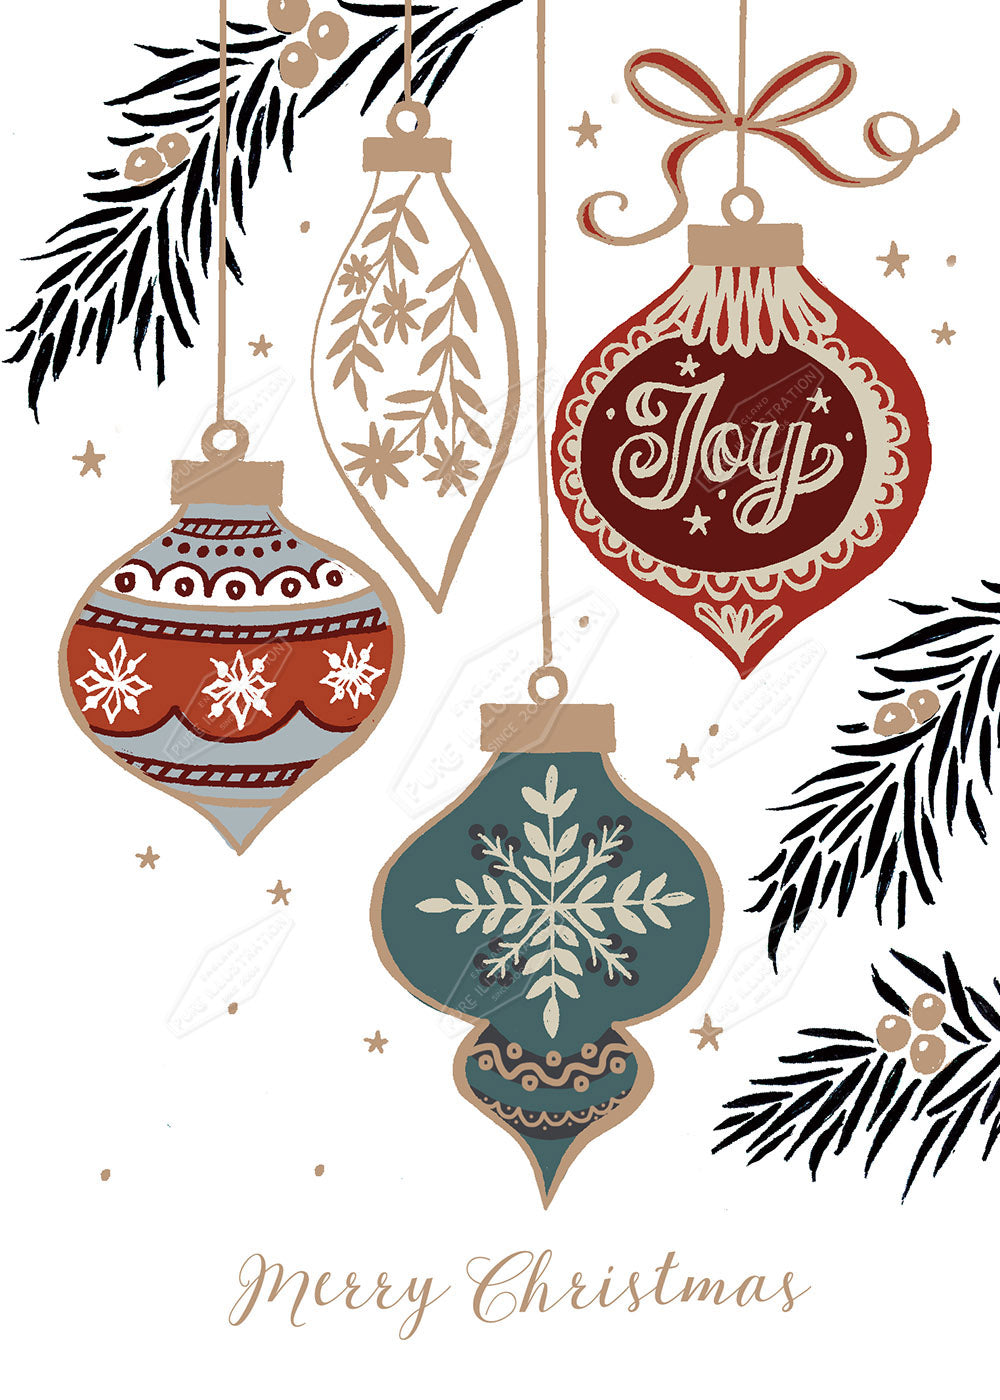 00034889DEV - Christmas Baubles Illustration by Deva Evans - Pure Art Licensing & Surface Design Studio